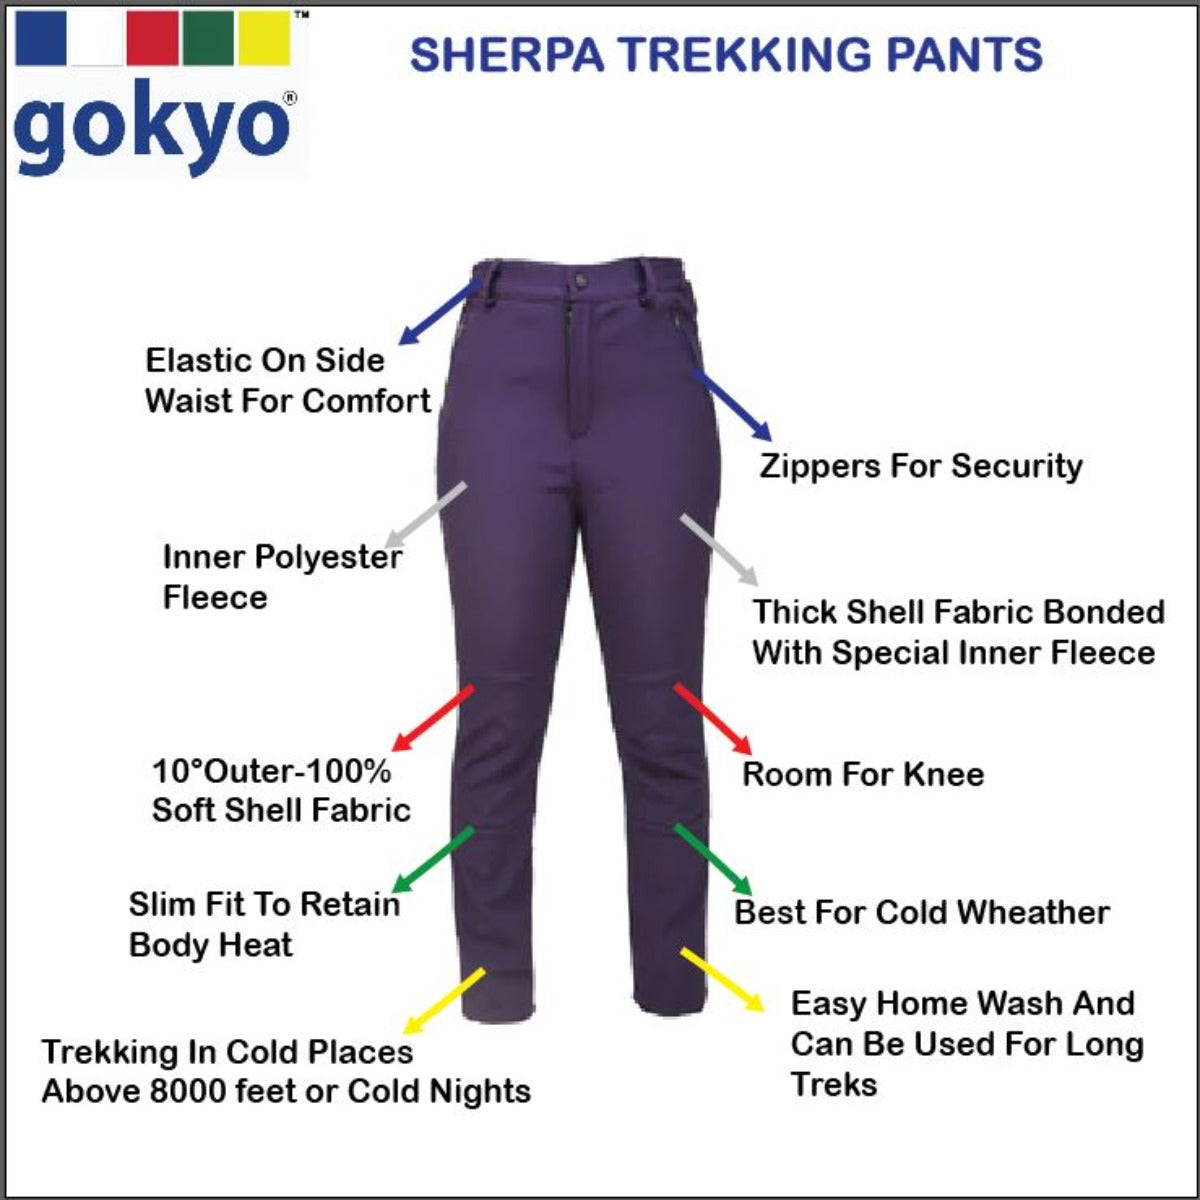 GOKYO Women's Trekking Pants - Cold Weather - Sherpa Series